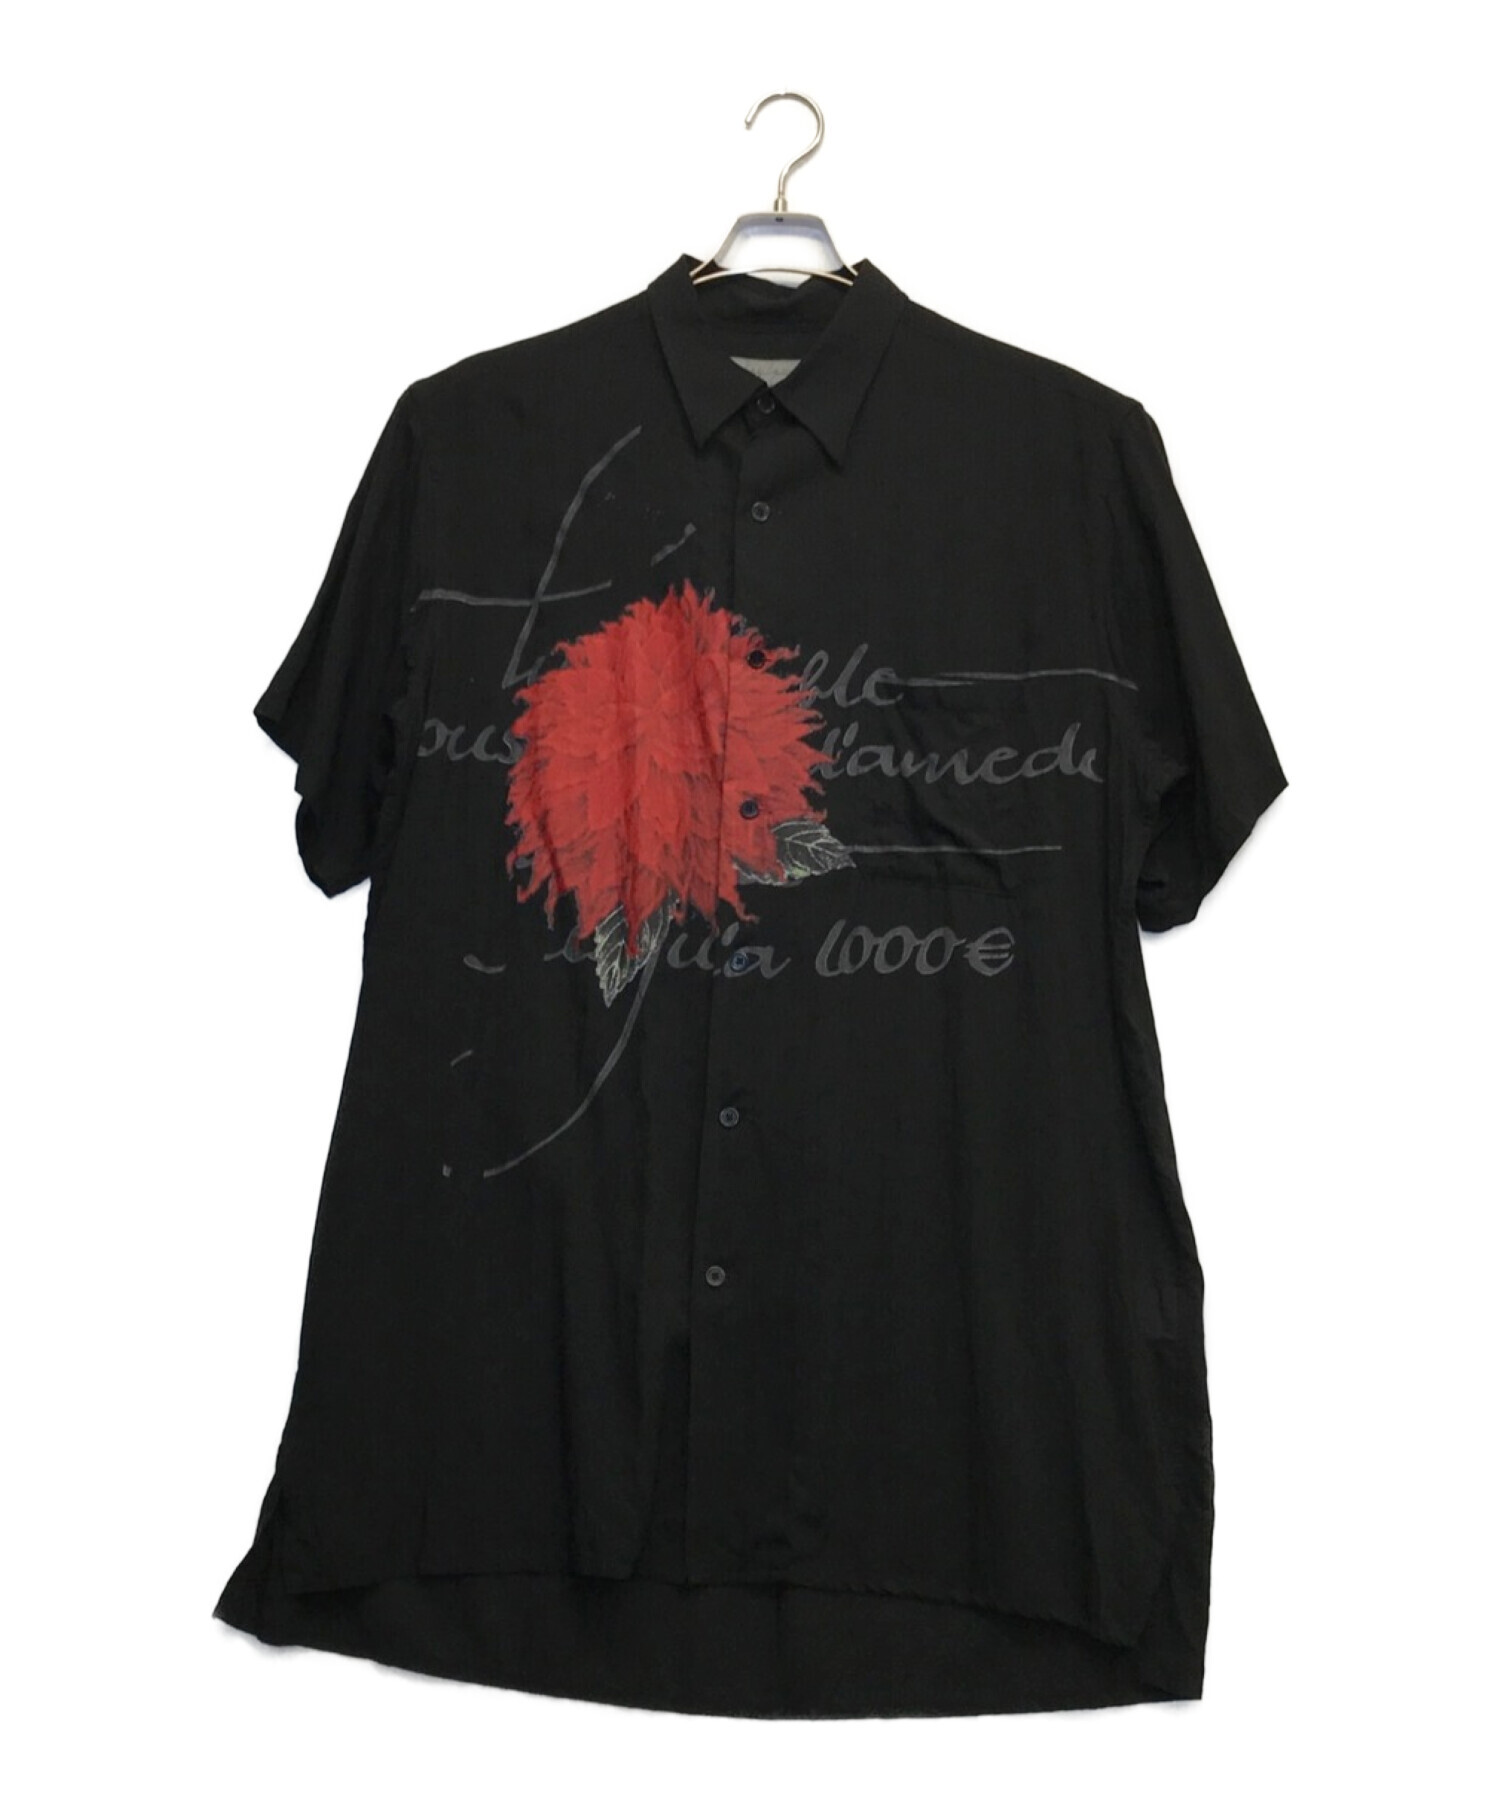 Yohji Yamamoto pour homme (ヨウジヤマモト プールオム) ダリアプリントブロード半袖 シャツ ブラック サイズ:3